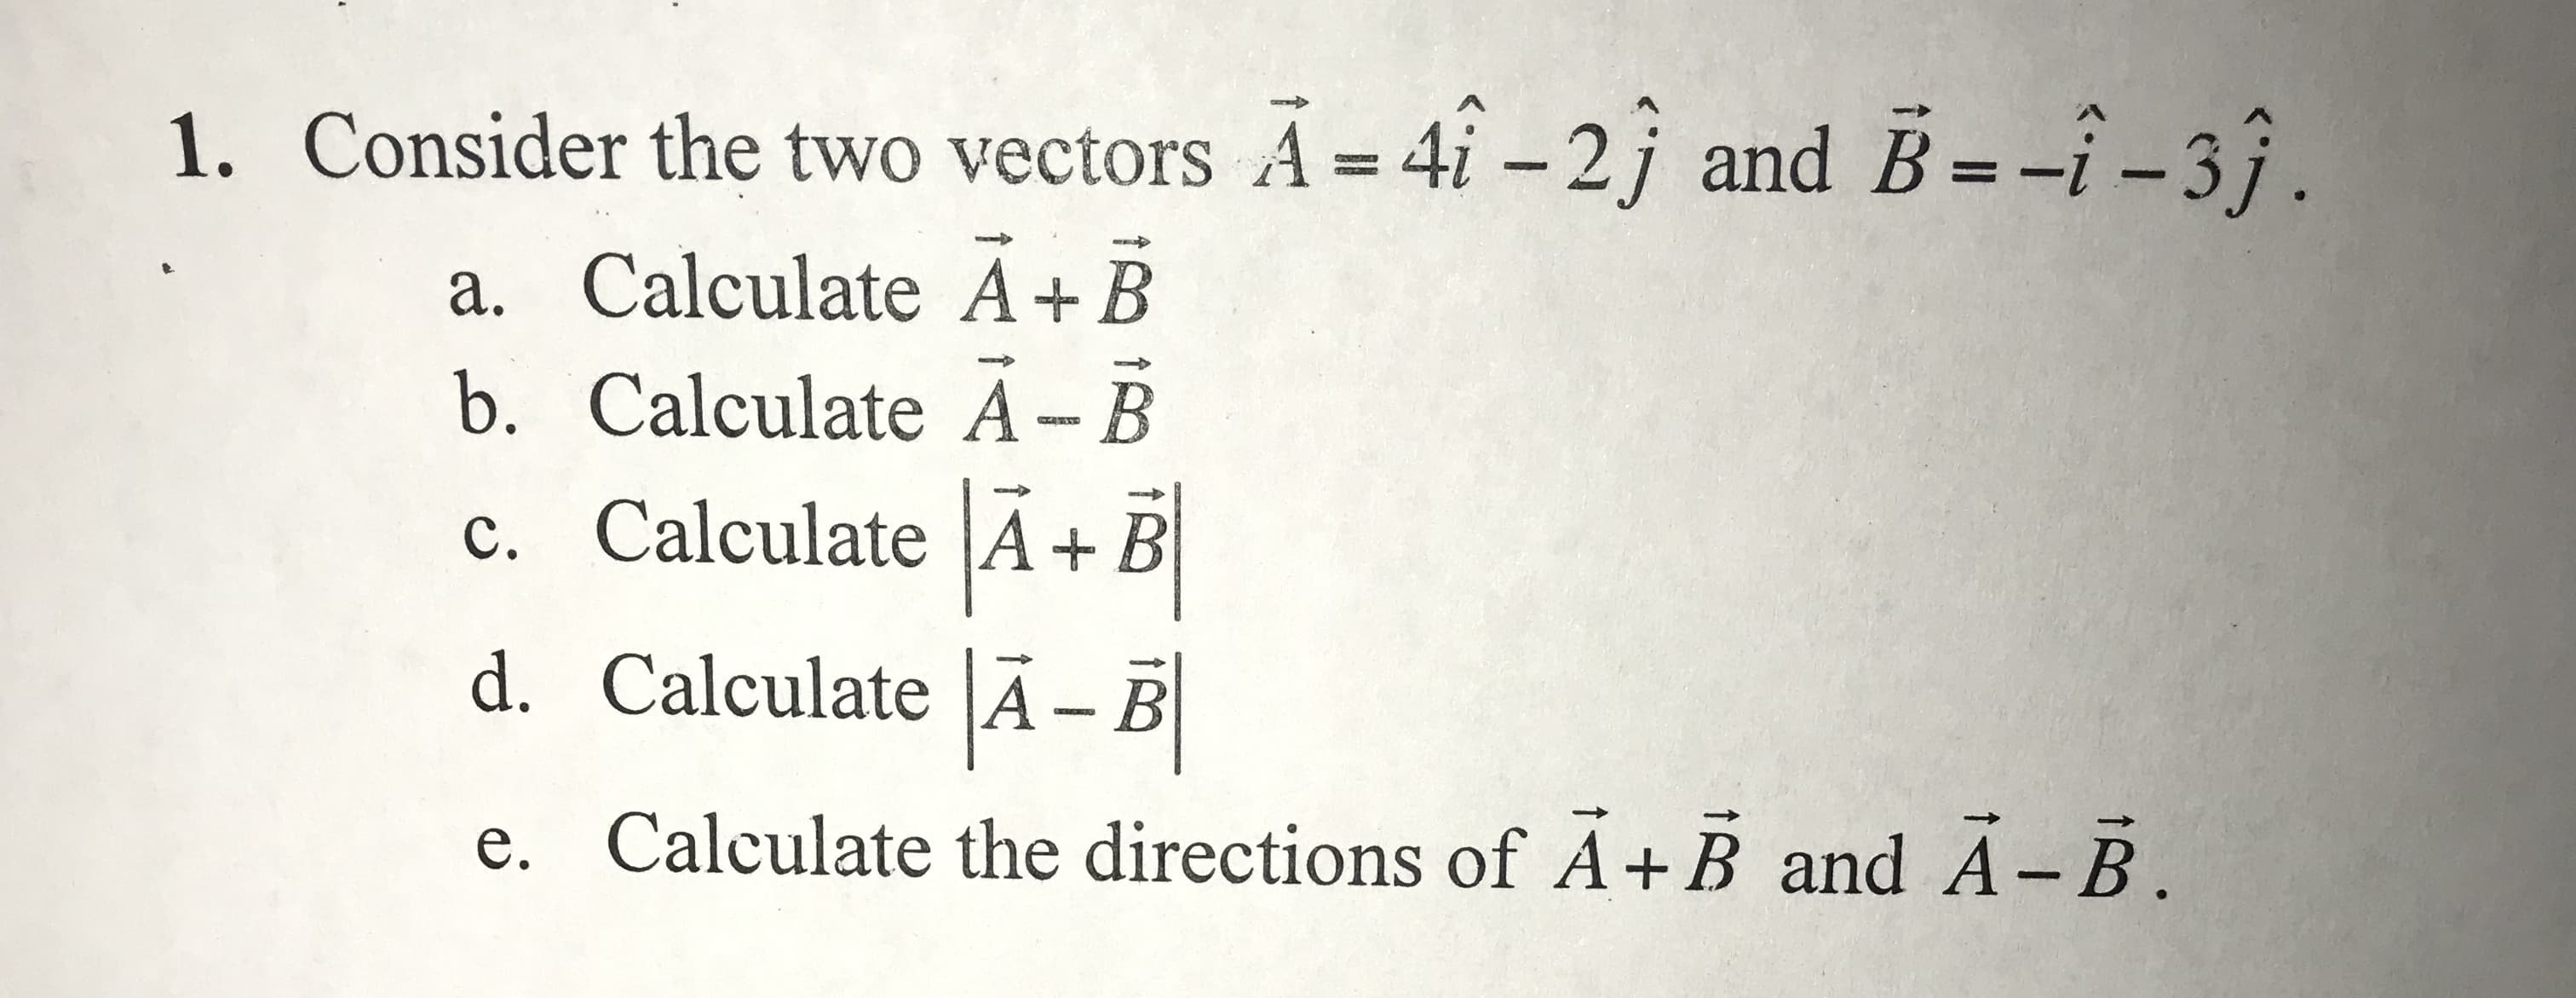 1.
Consider the two vectors A 4i -2j and B--i-3j.
a. Calculate A+ B
b. Calculate A- B
c. Calculate AE
d. Calculate A- B
e. Calculate the directions of A+B and A - B
